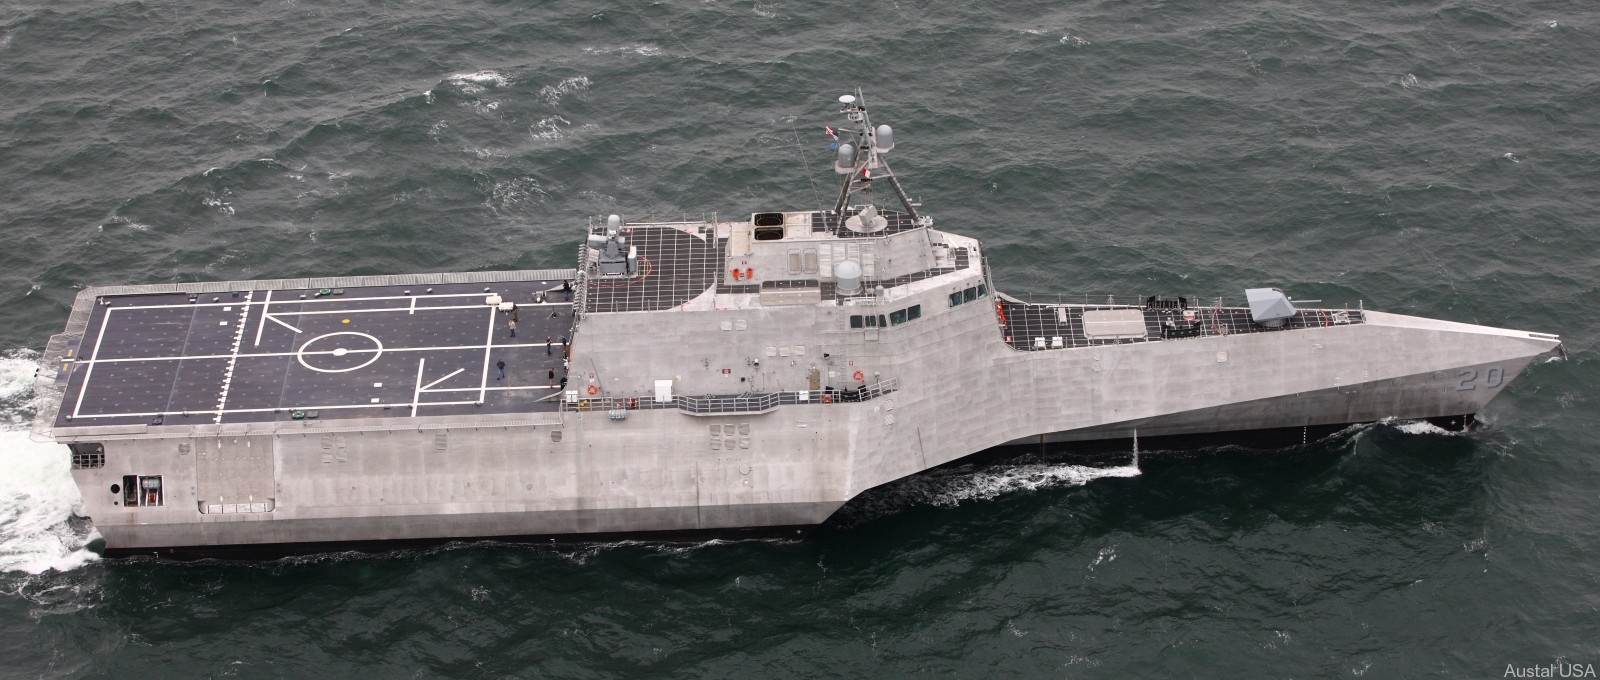 lcs-20 uss cincinnati independence class littoral combat ship us navy 14 trials austal usa